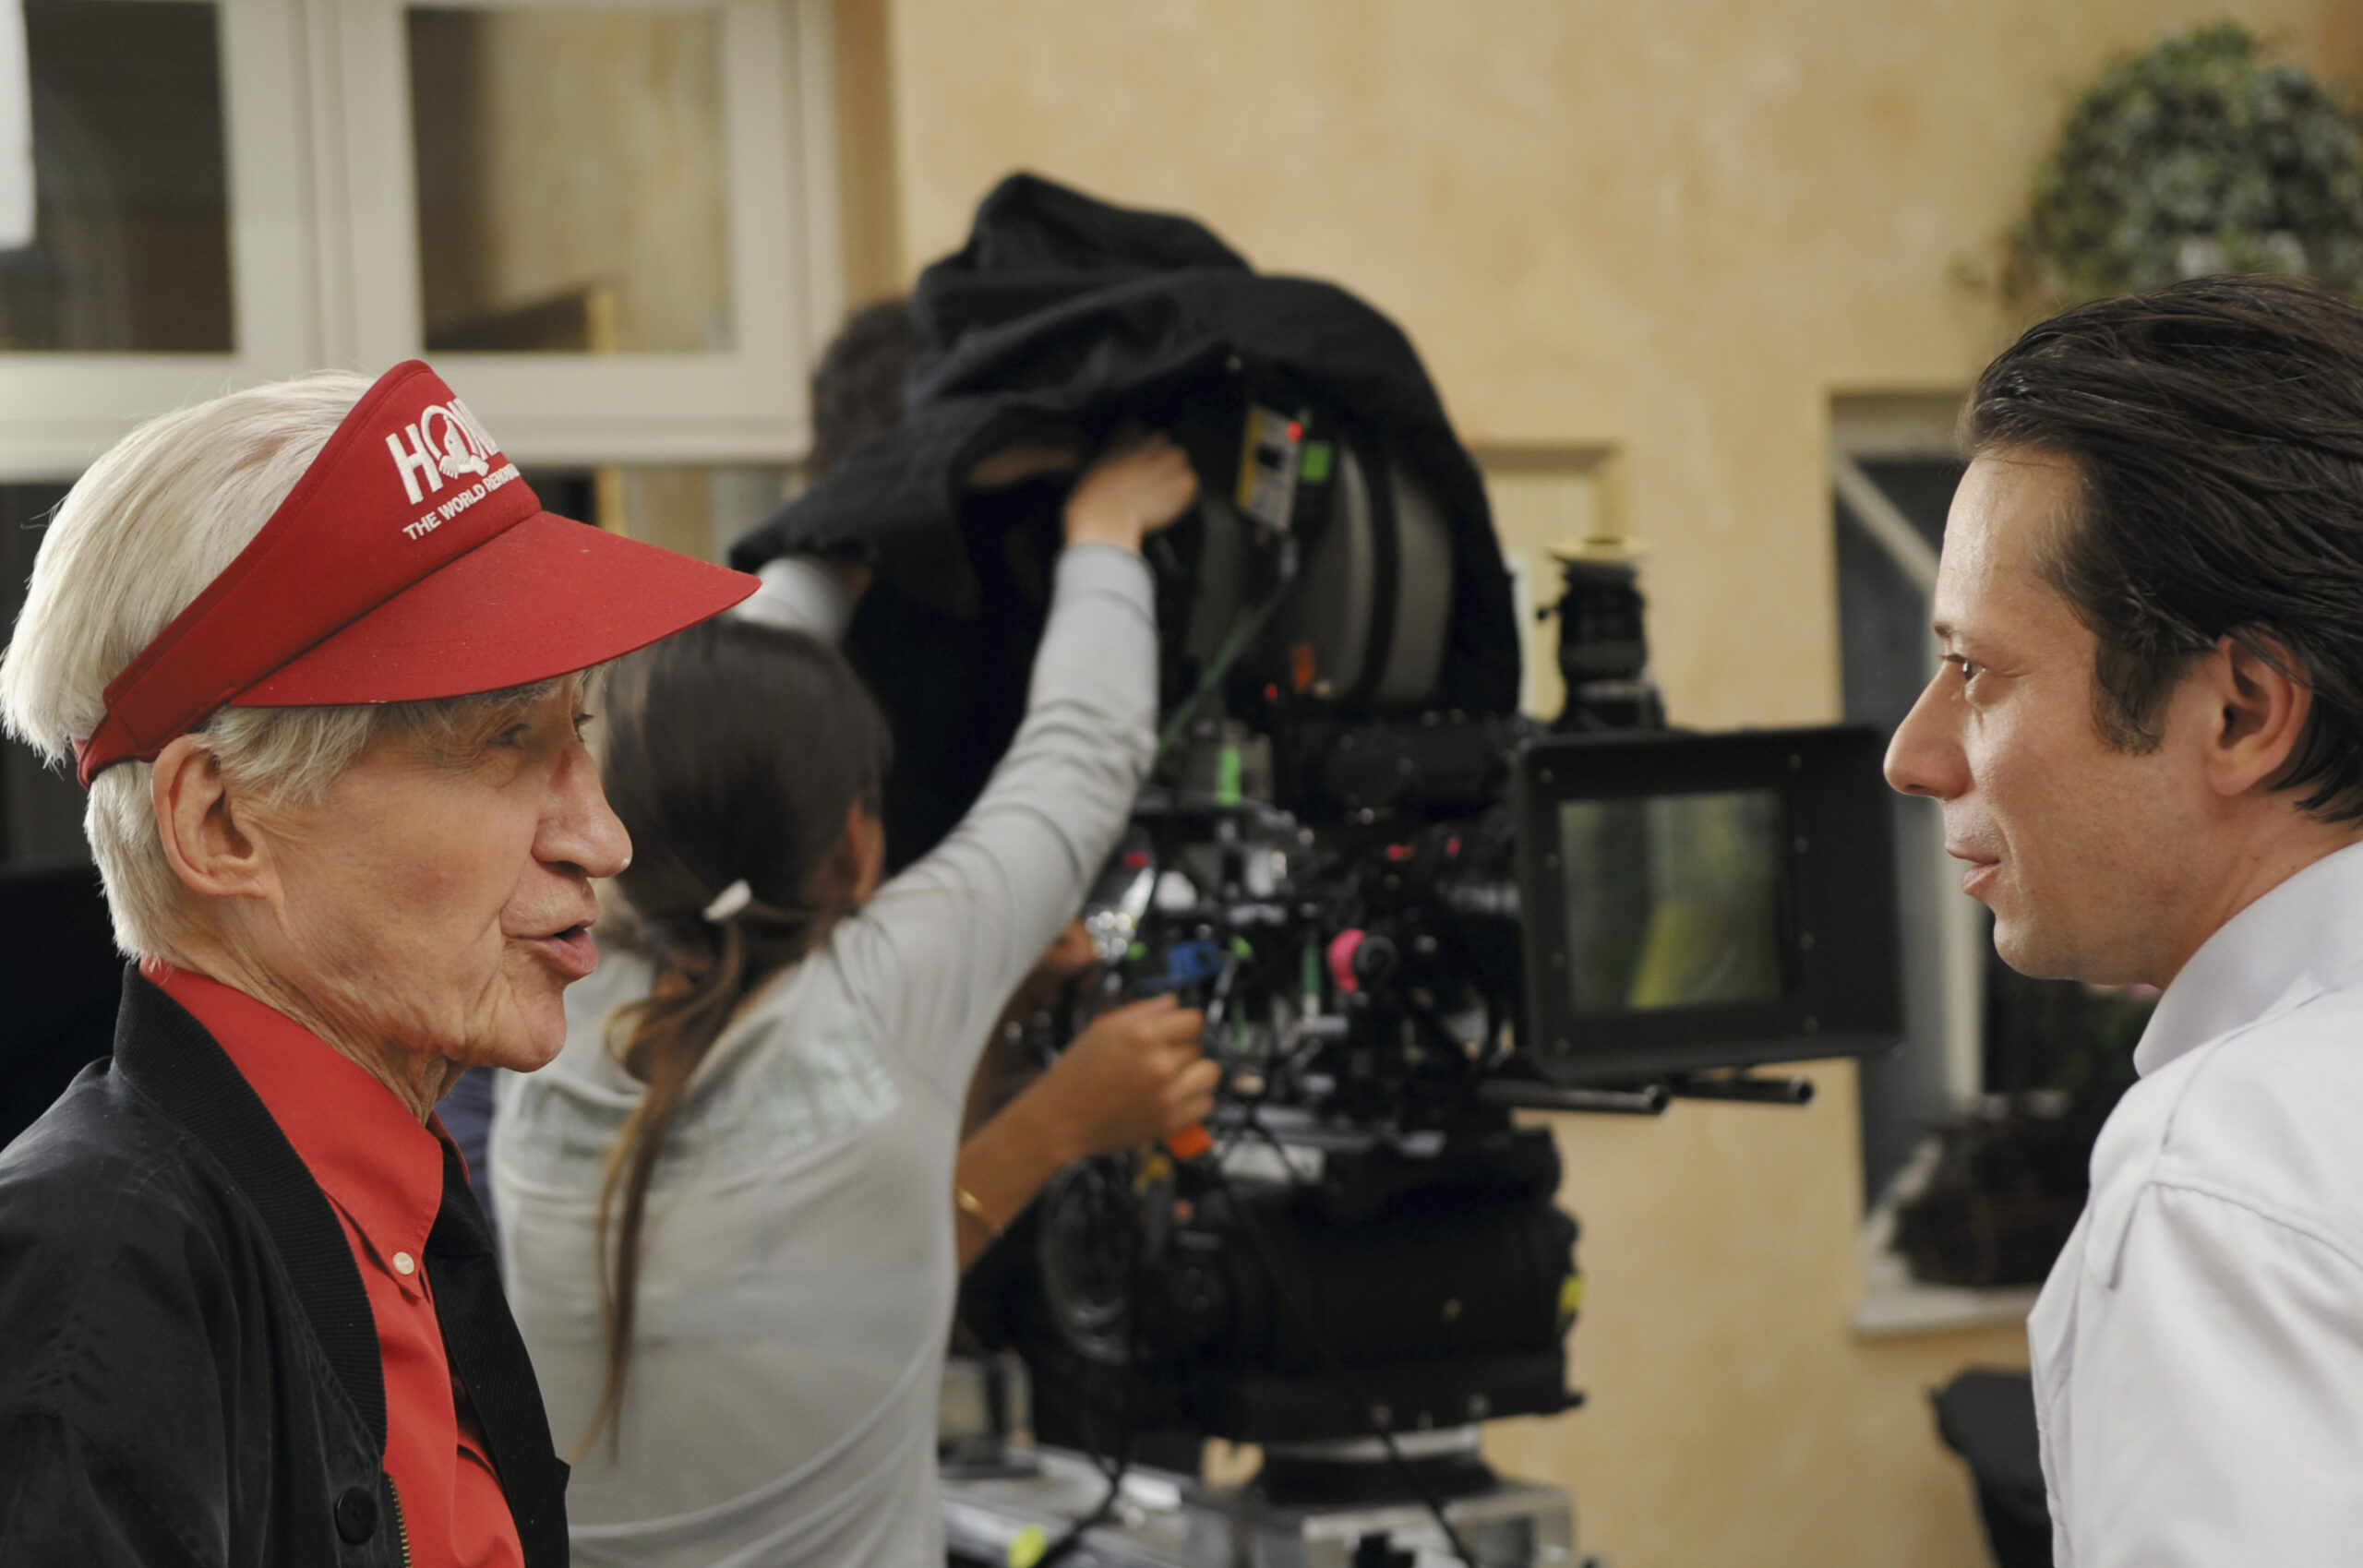 Director Alain Resnais going over a scene with Mathieu Amalric